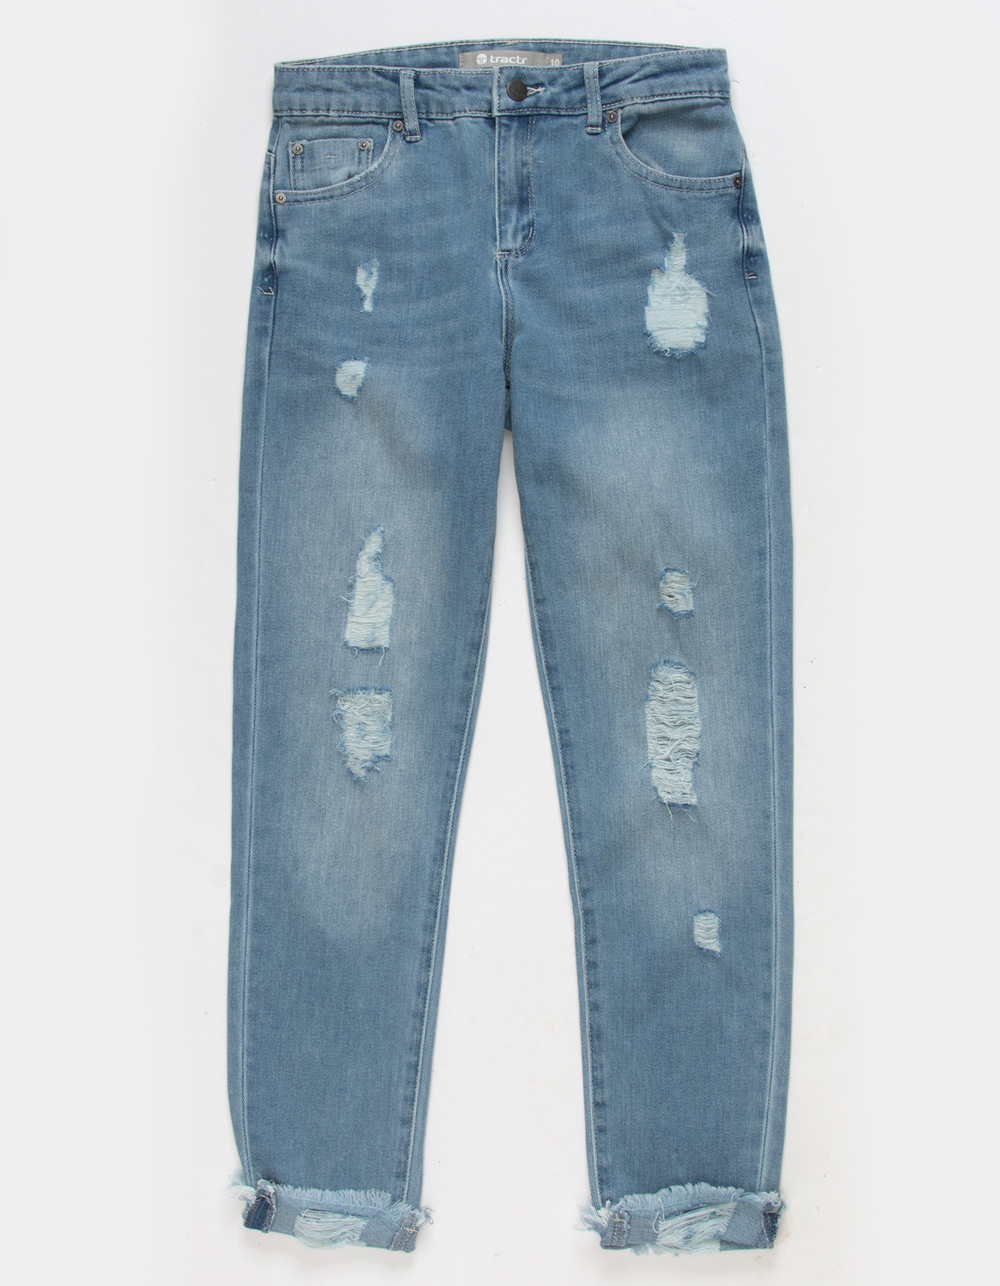 TRACTR Weekender High Rise Girls Destructed Jeans - MEDIUM WASH | Tillys